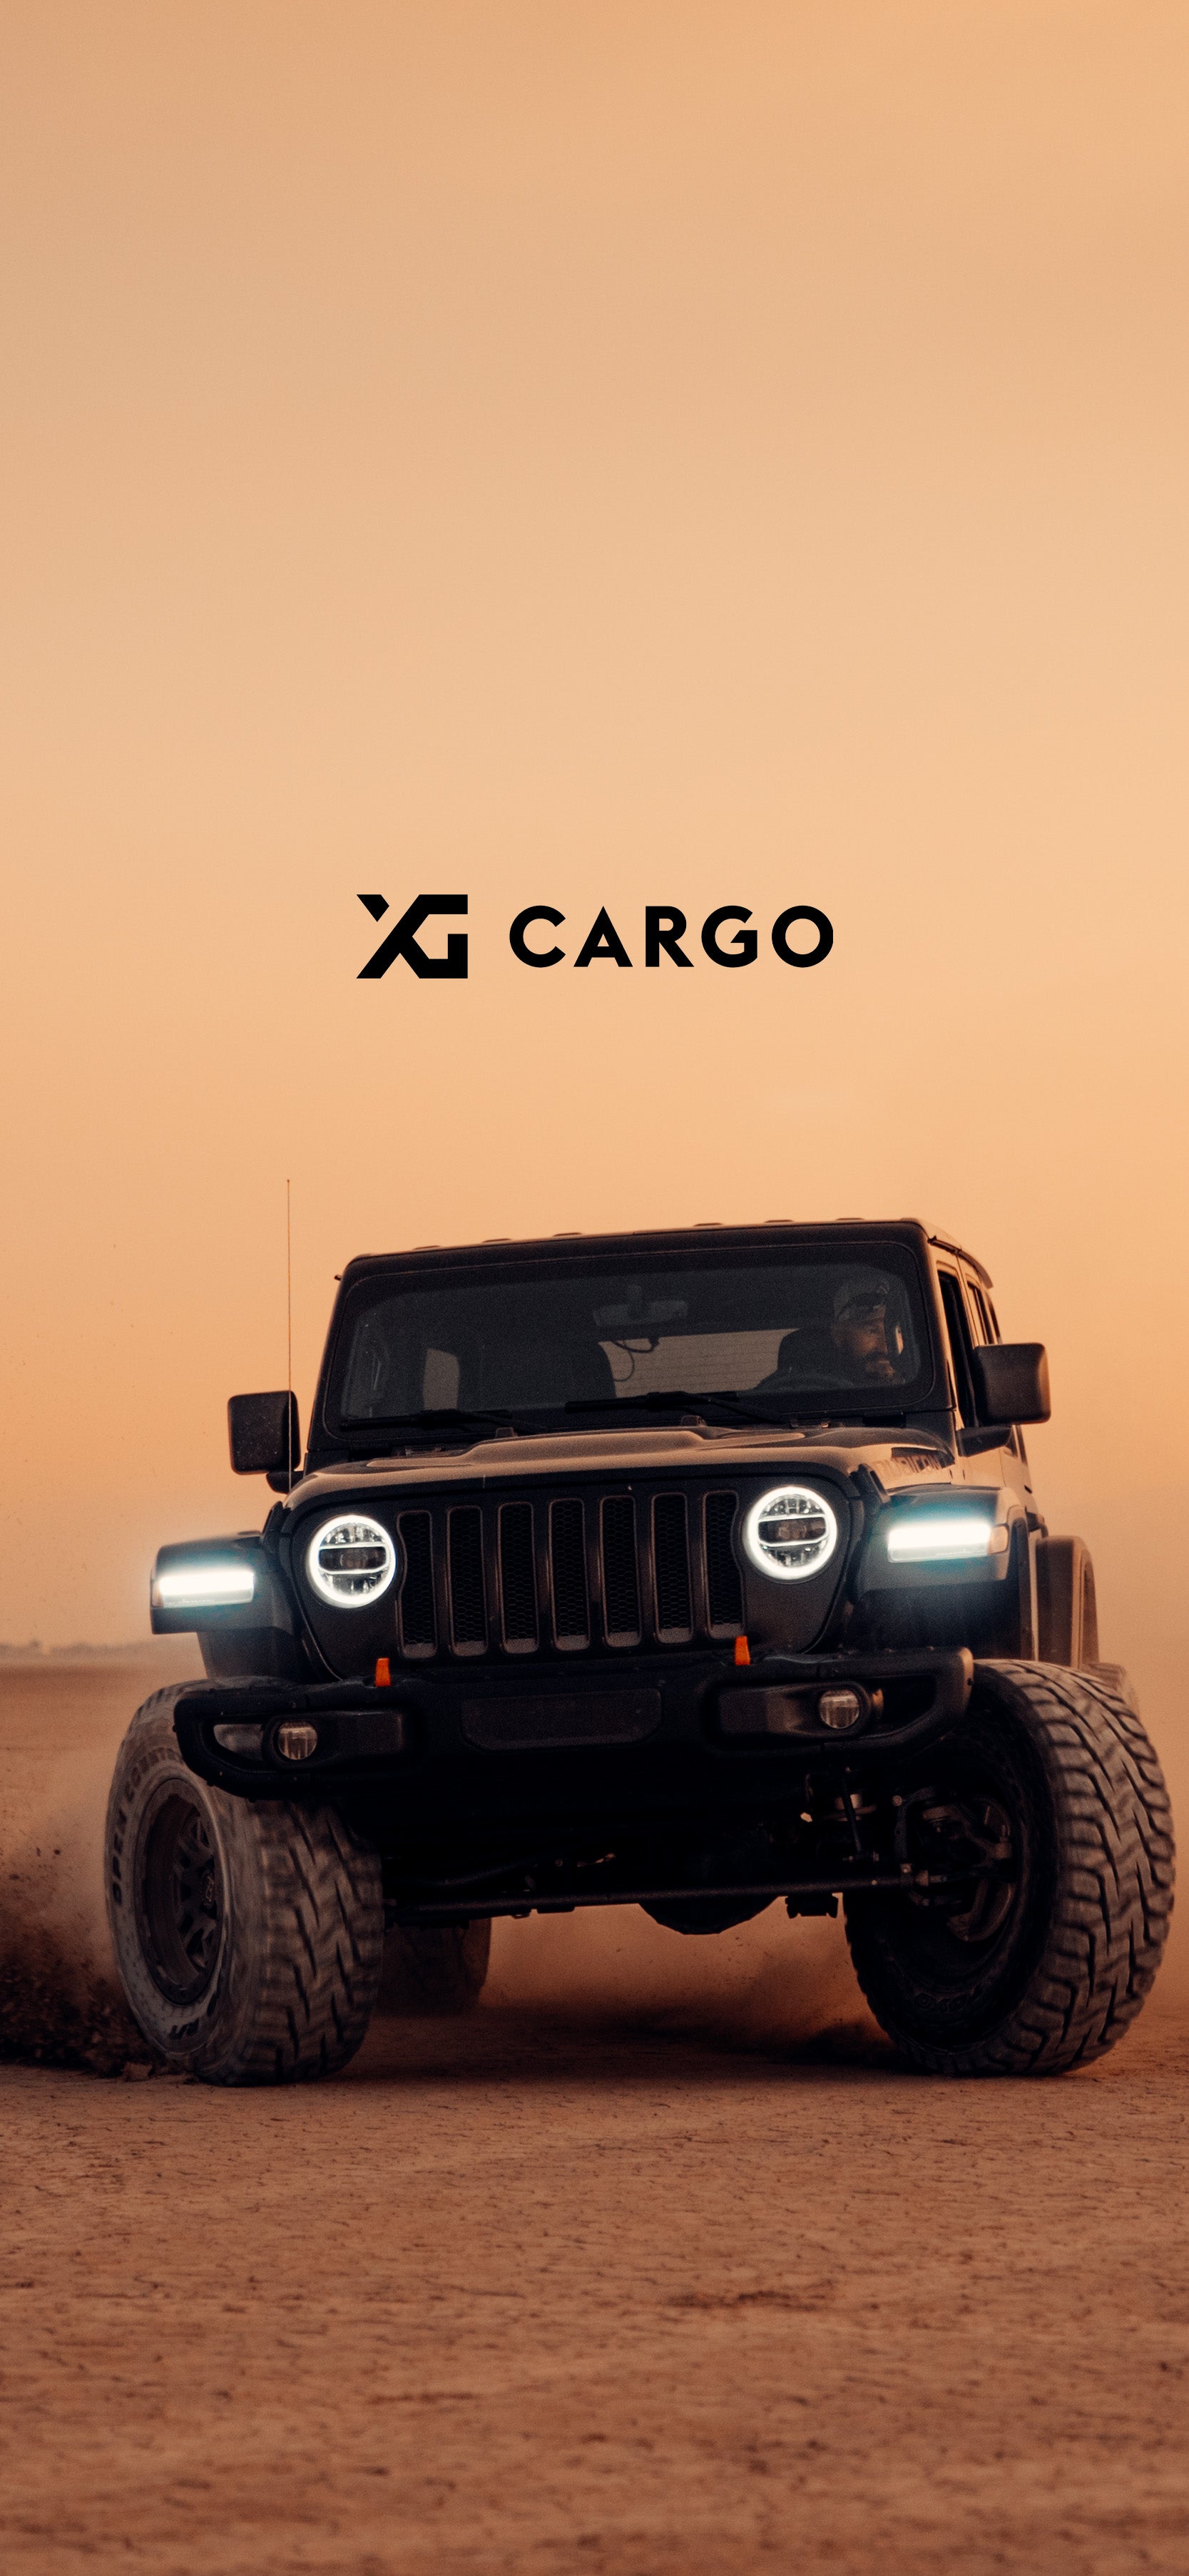 XG Cargo Phone Wallpaper